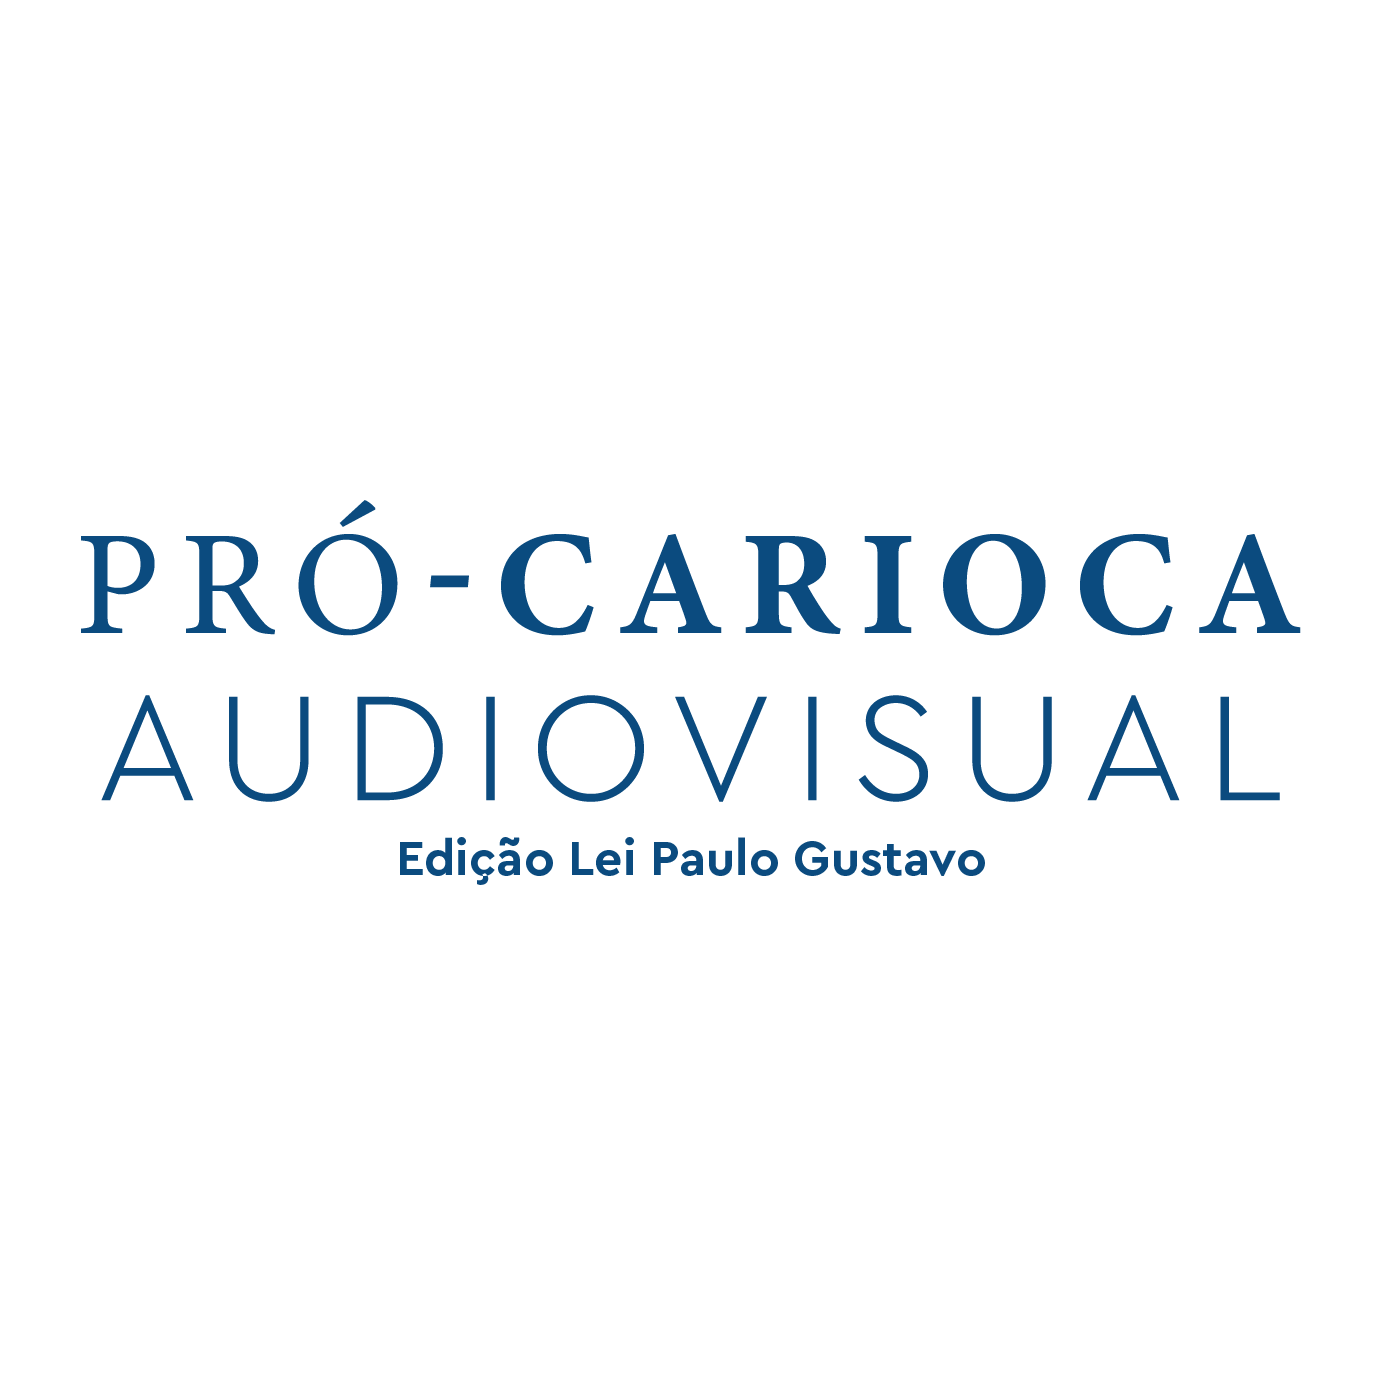 PRÓ-CARIOCA AUDIOVISUAL